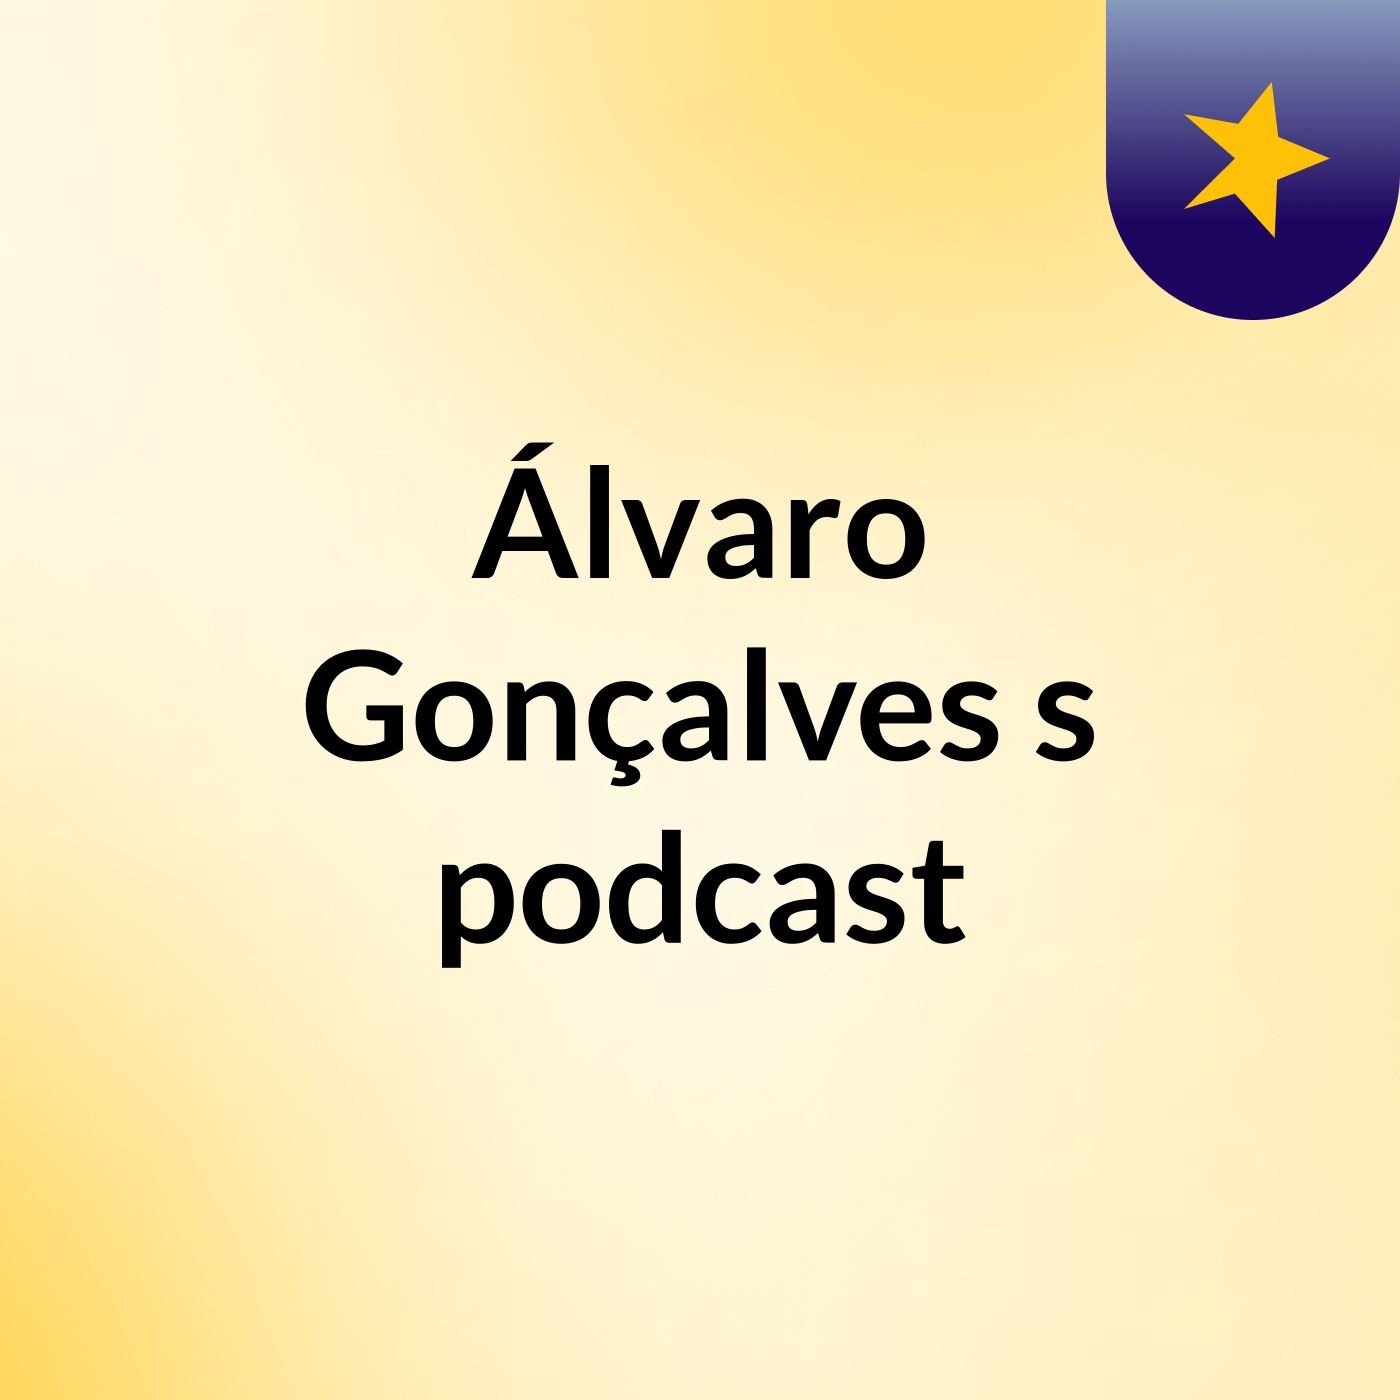 Álvaro Gonçalves's podcast